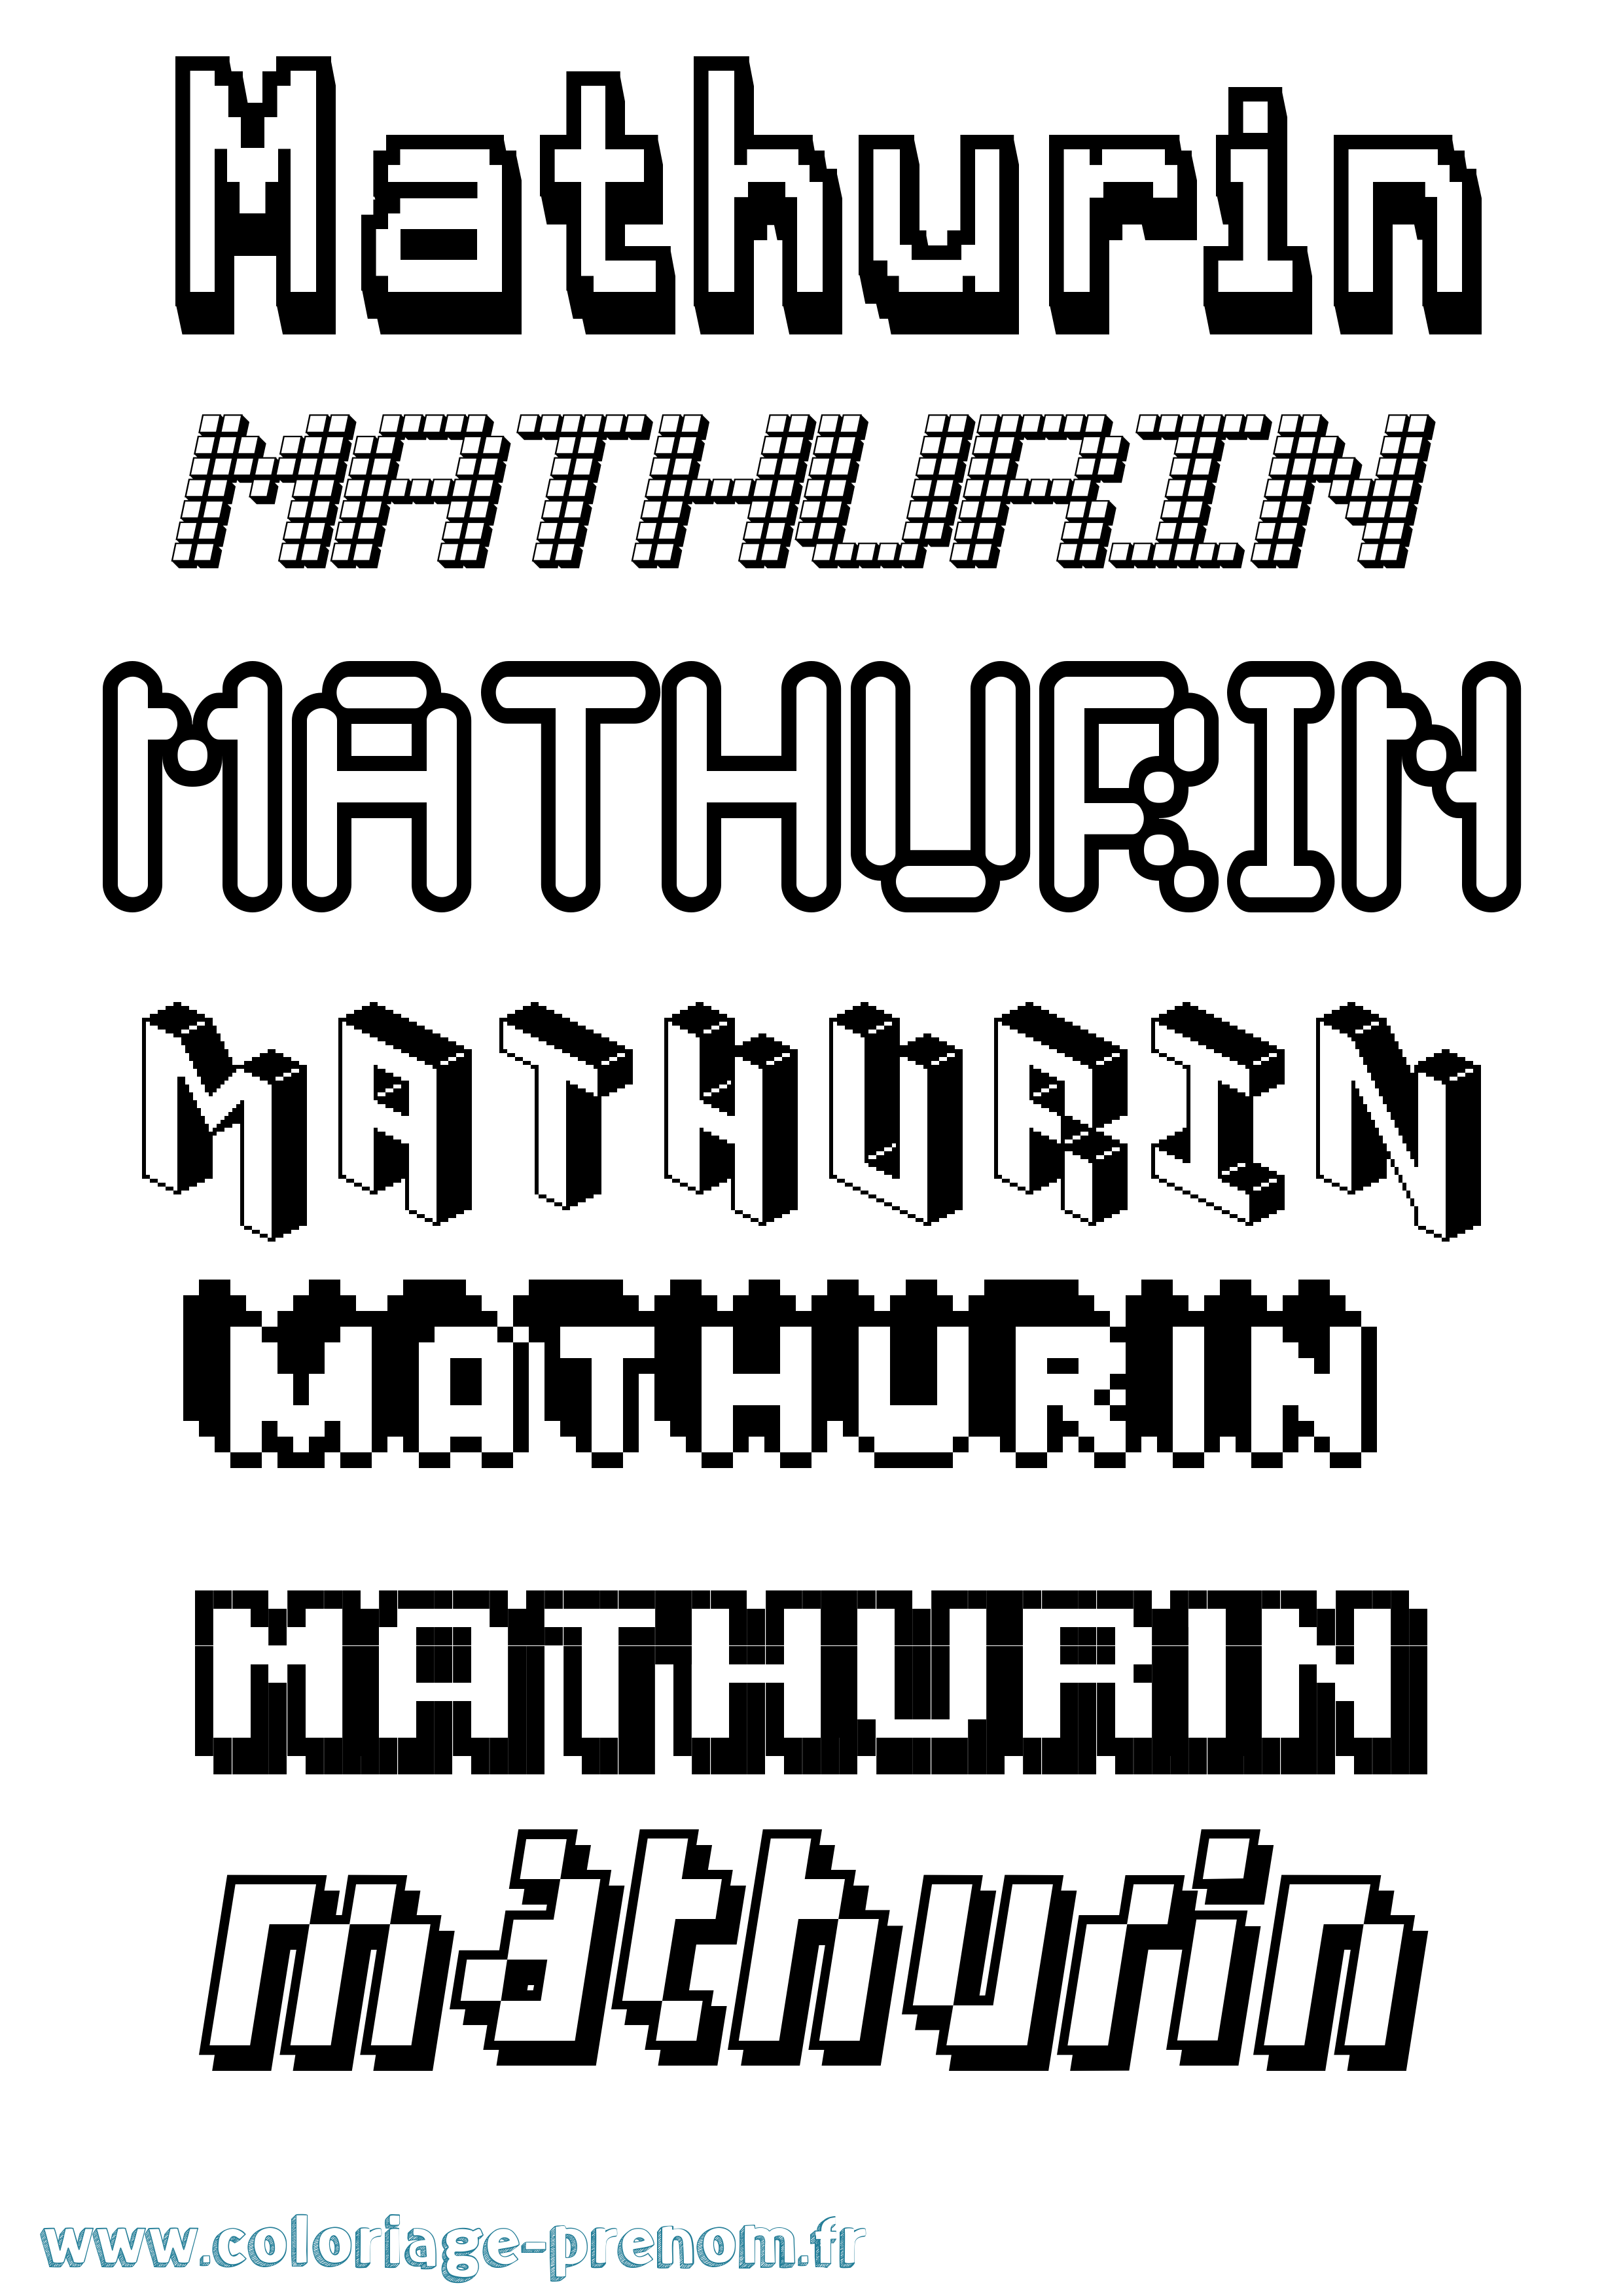 Coloriage prénom Mathurin Pixel